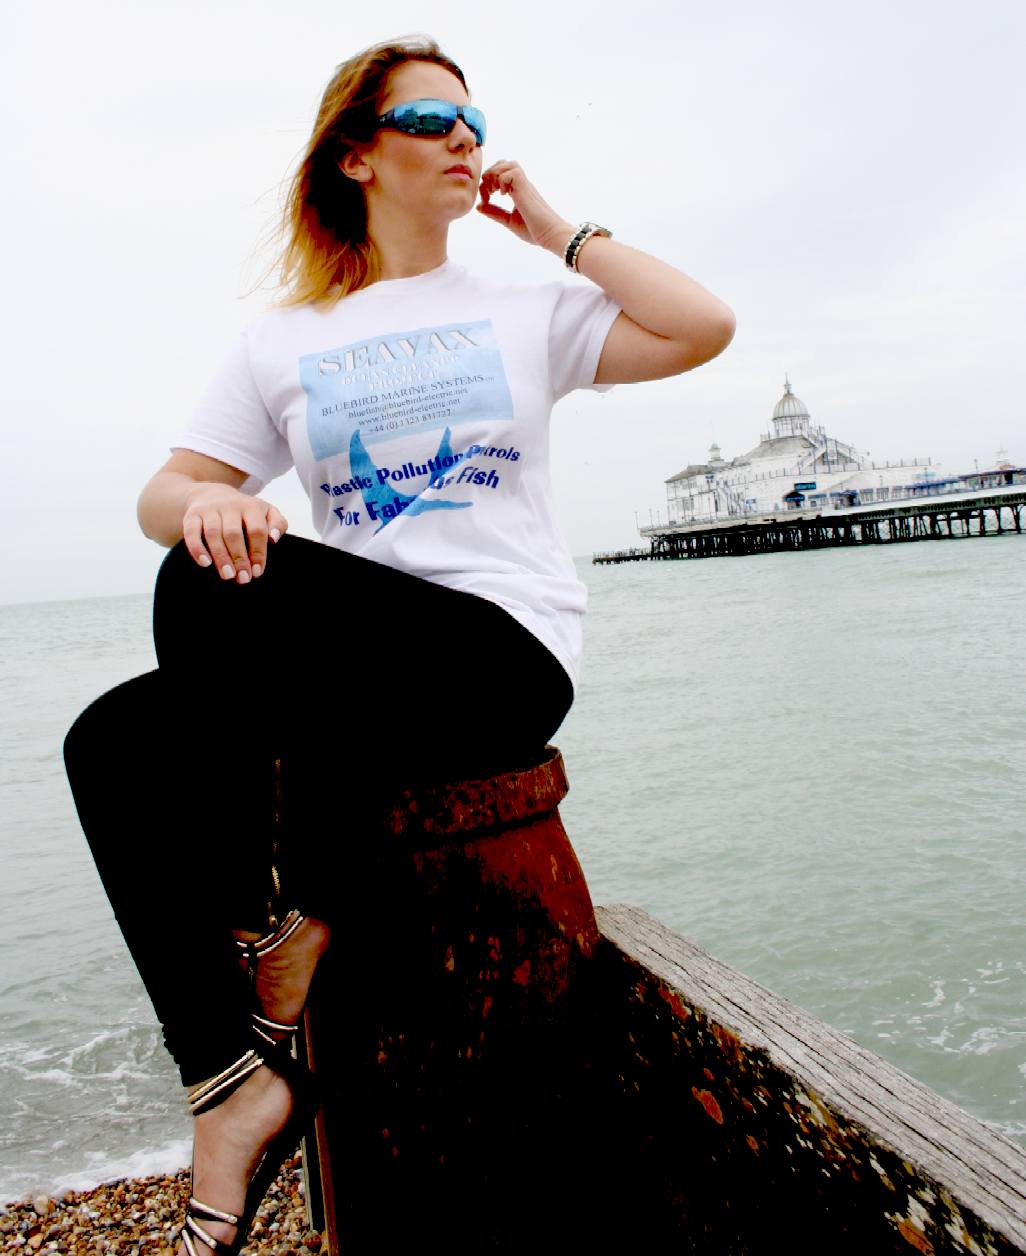 Miss Ocean June 2015, Monika from Eastbourne in Sussex, England